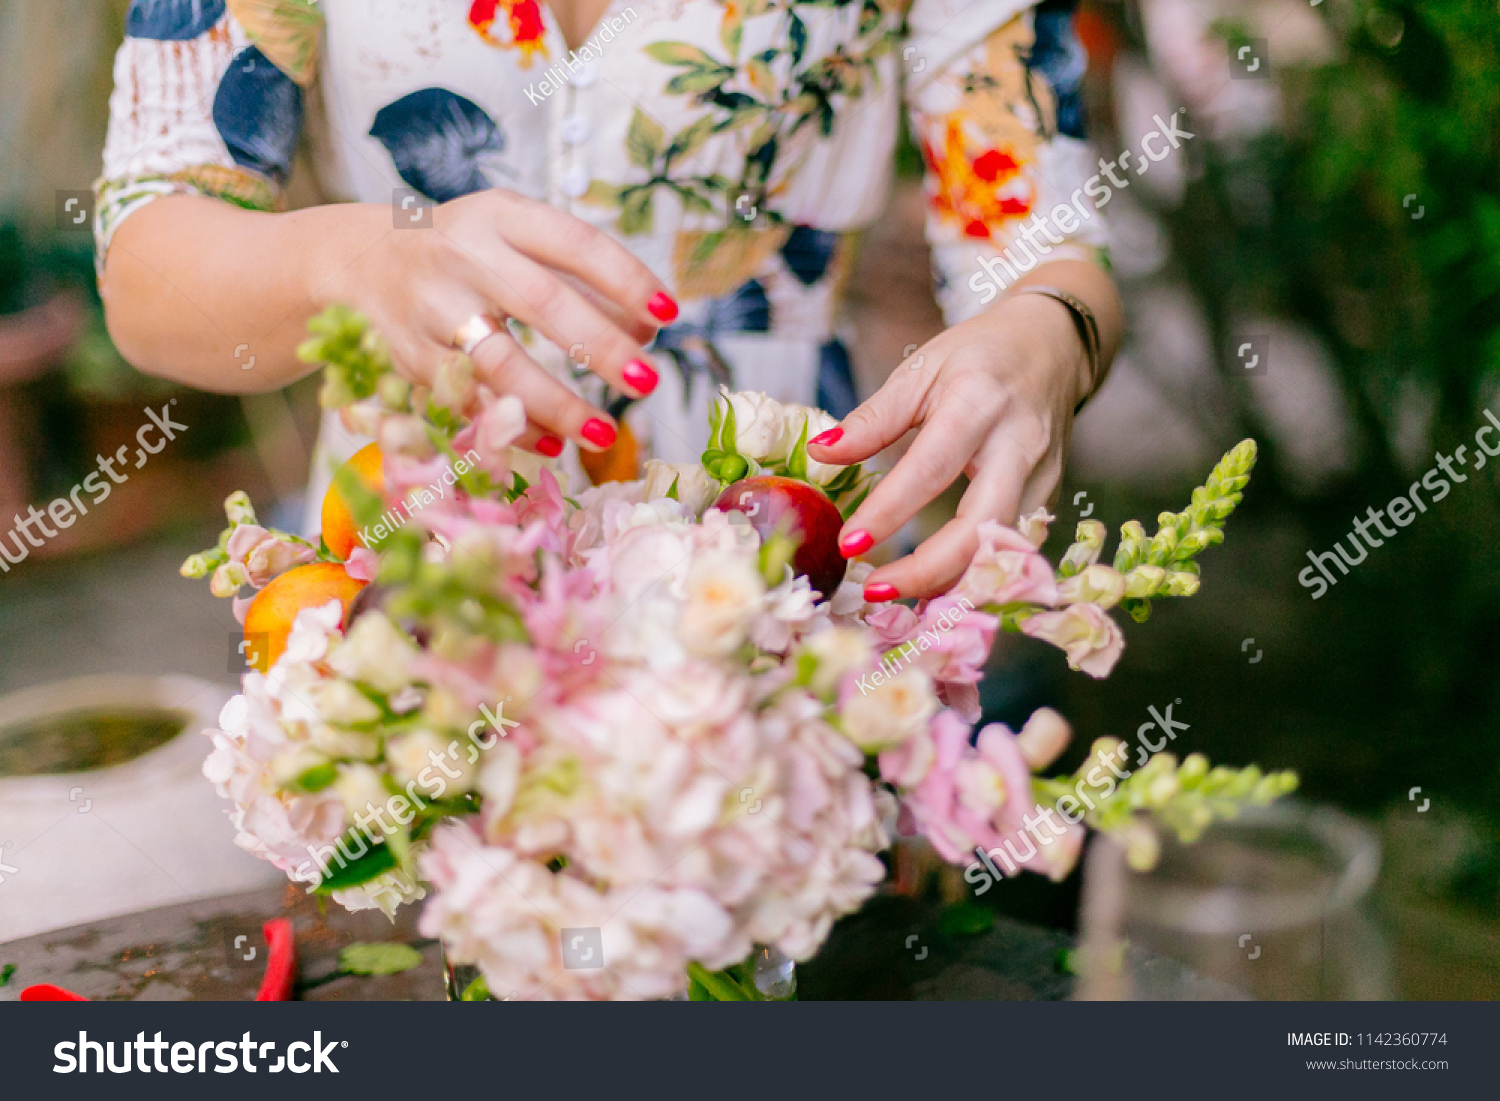 Close ups of woman florist's hands creating floral arrangements in garden #1142360774